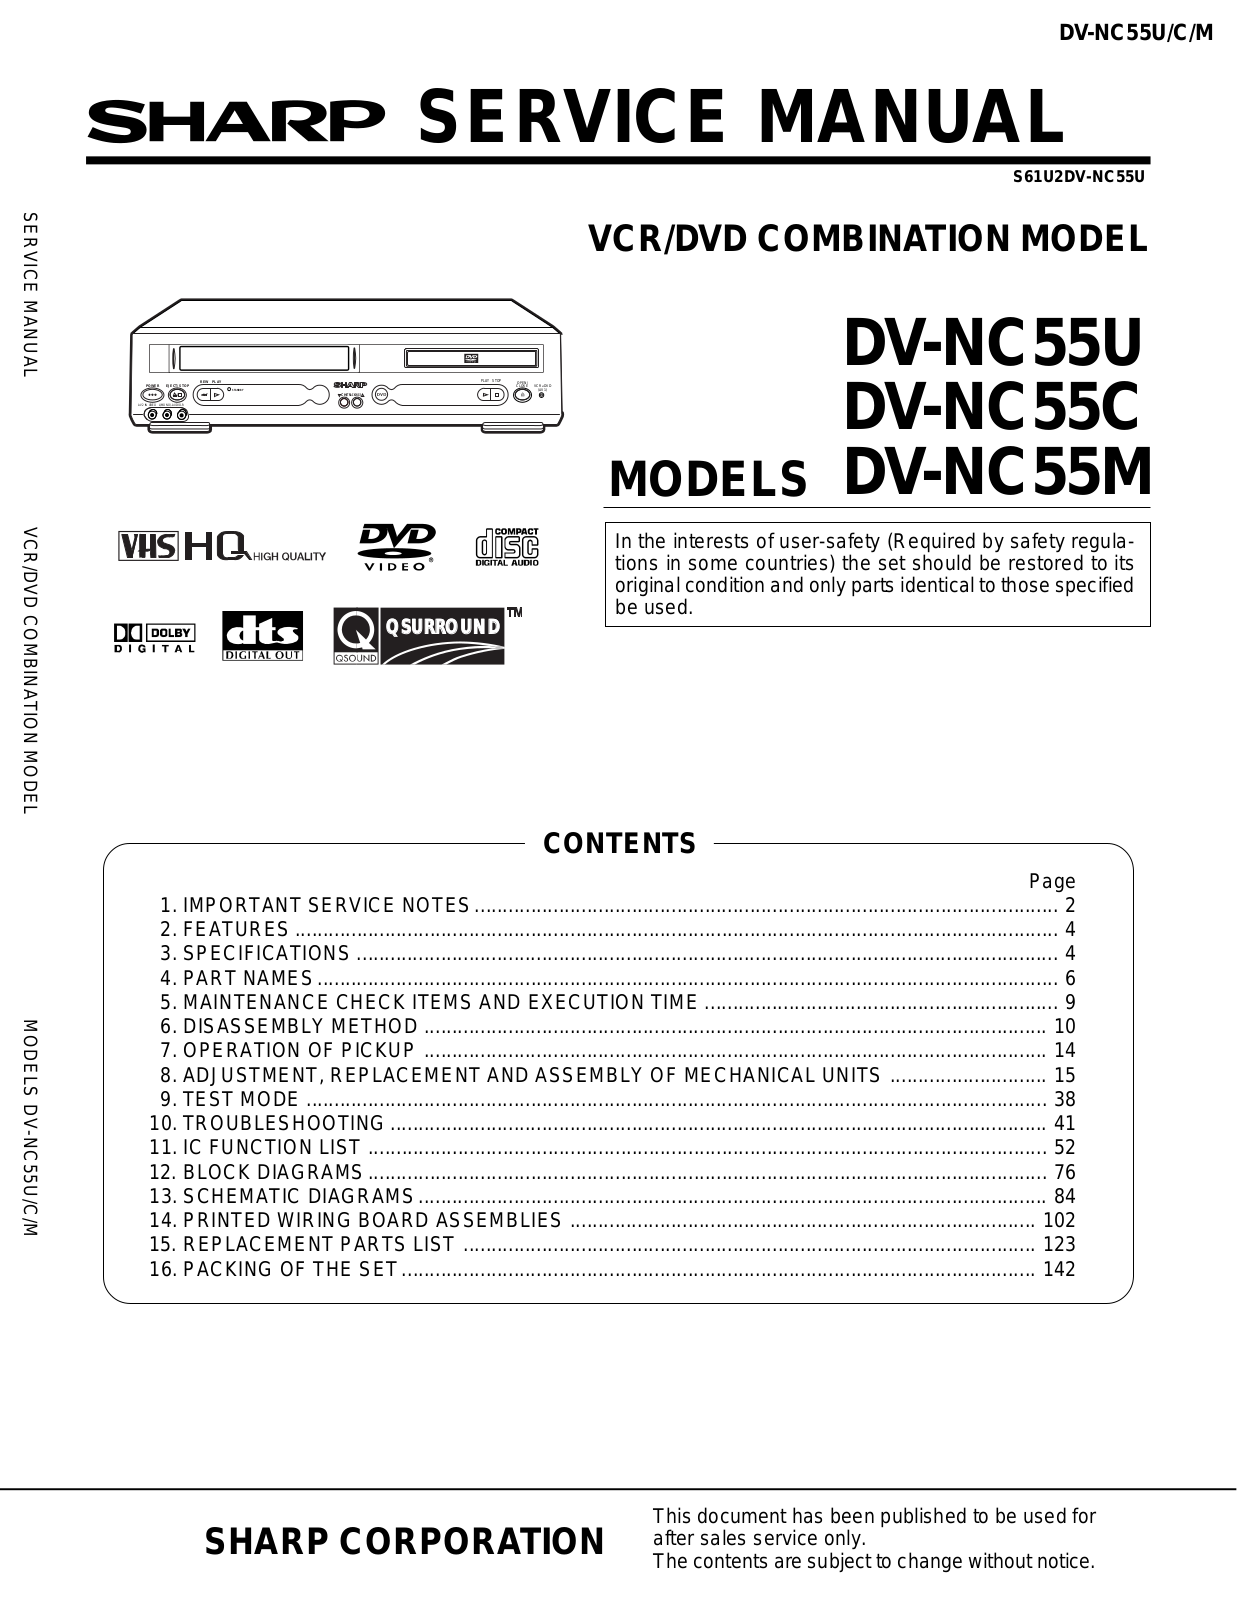 Sharp DV-NC55M, DV-NC55U, DV-NC55C User Manual